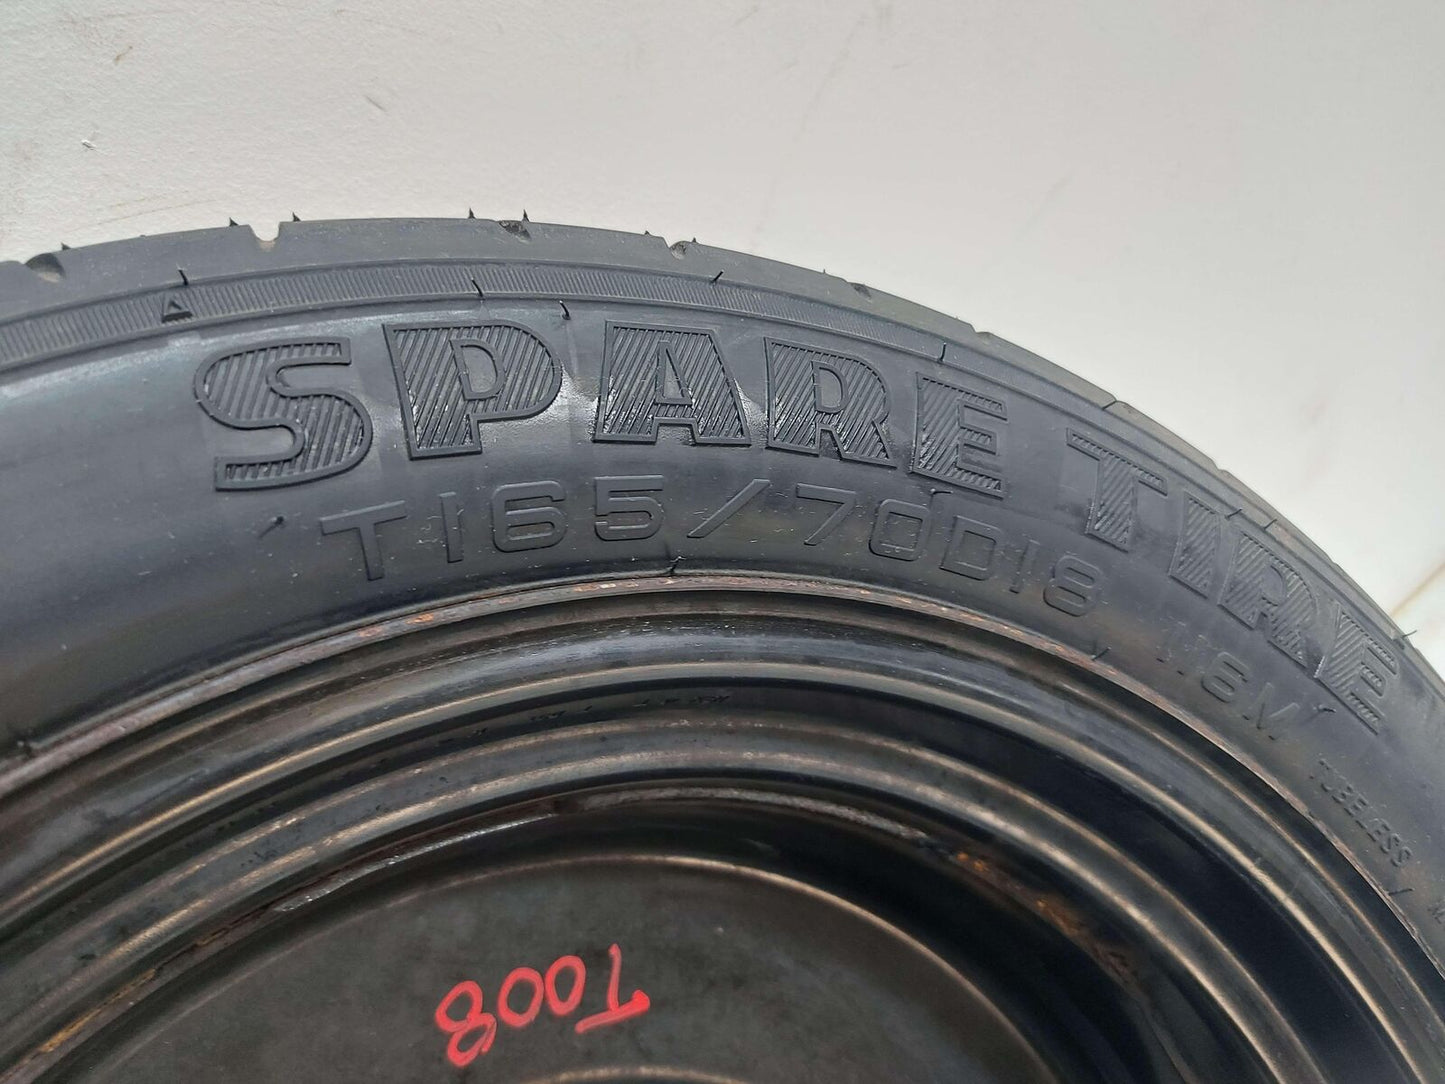 13-19 Explorer Compact Spare Maxxis Tire T165/70D18 Steel Wheel 18X4 DA5Z1015C